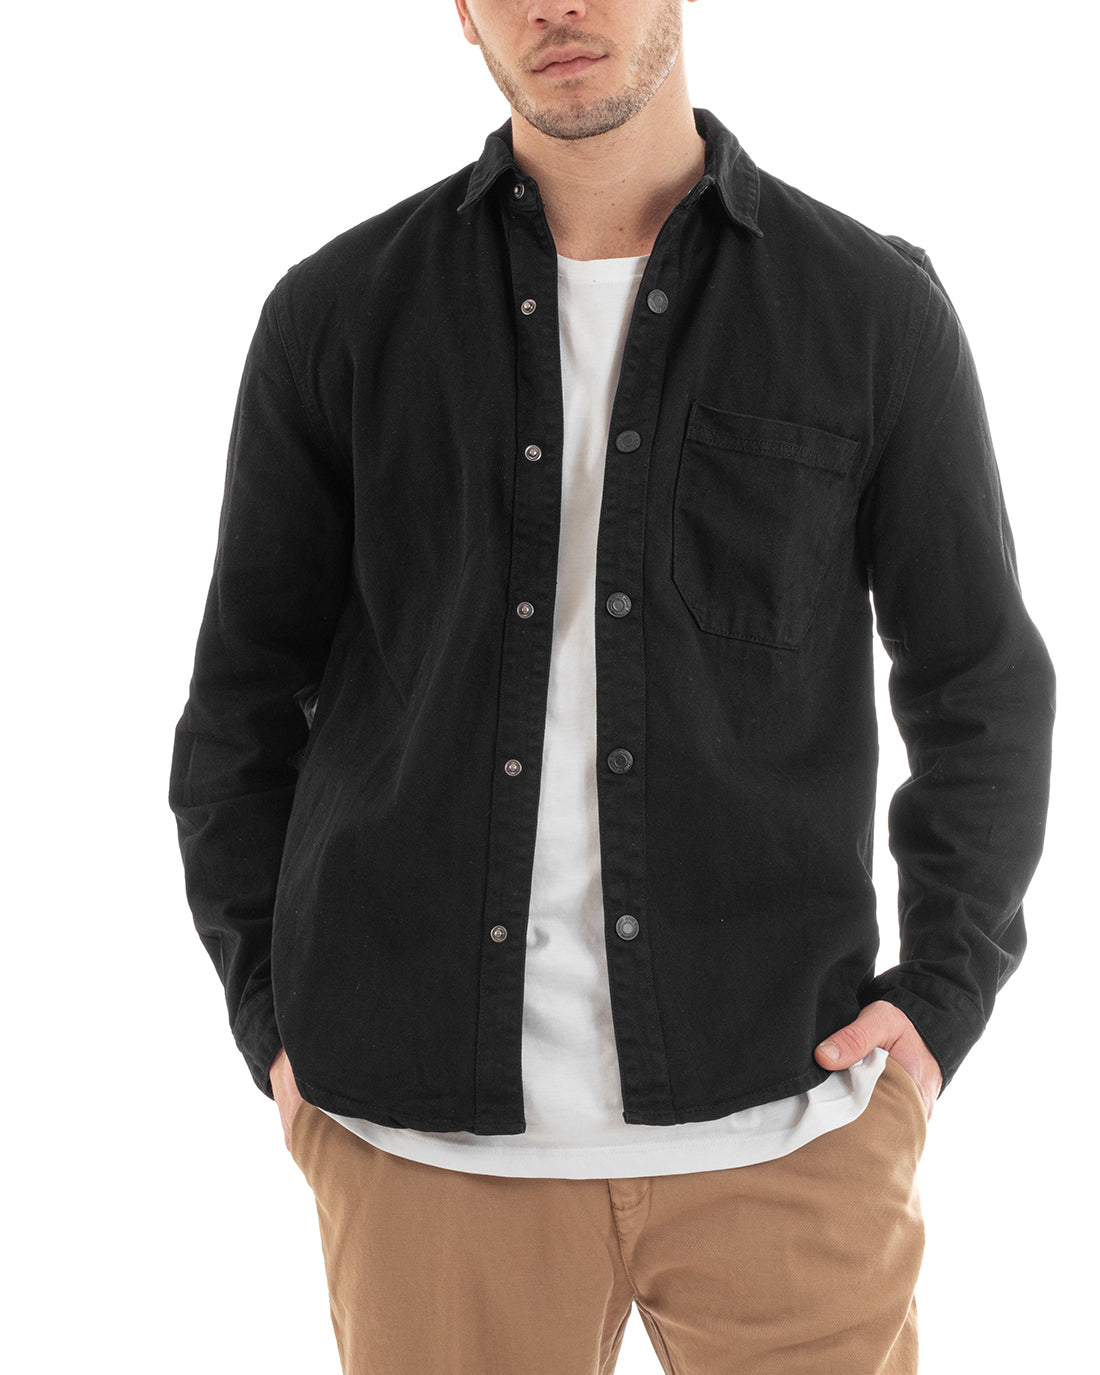 Shirt With Collar Long Sleeve Shirt Denim Jeans Jacket Black GIOSAL-C2654A